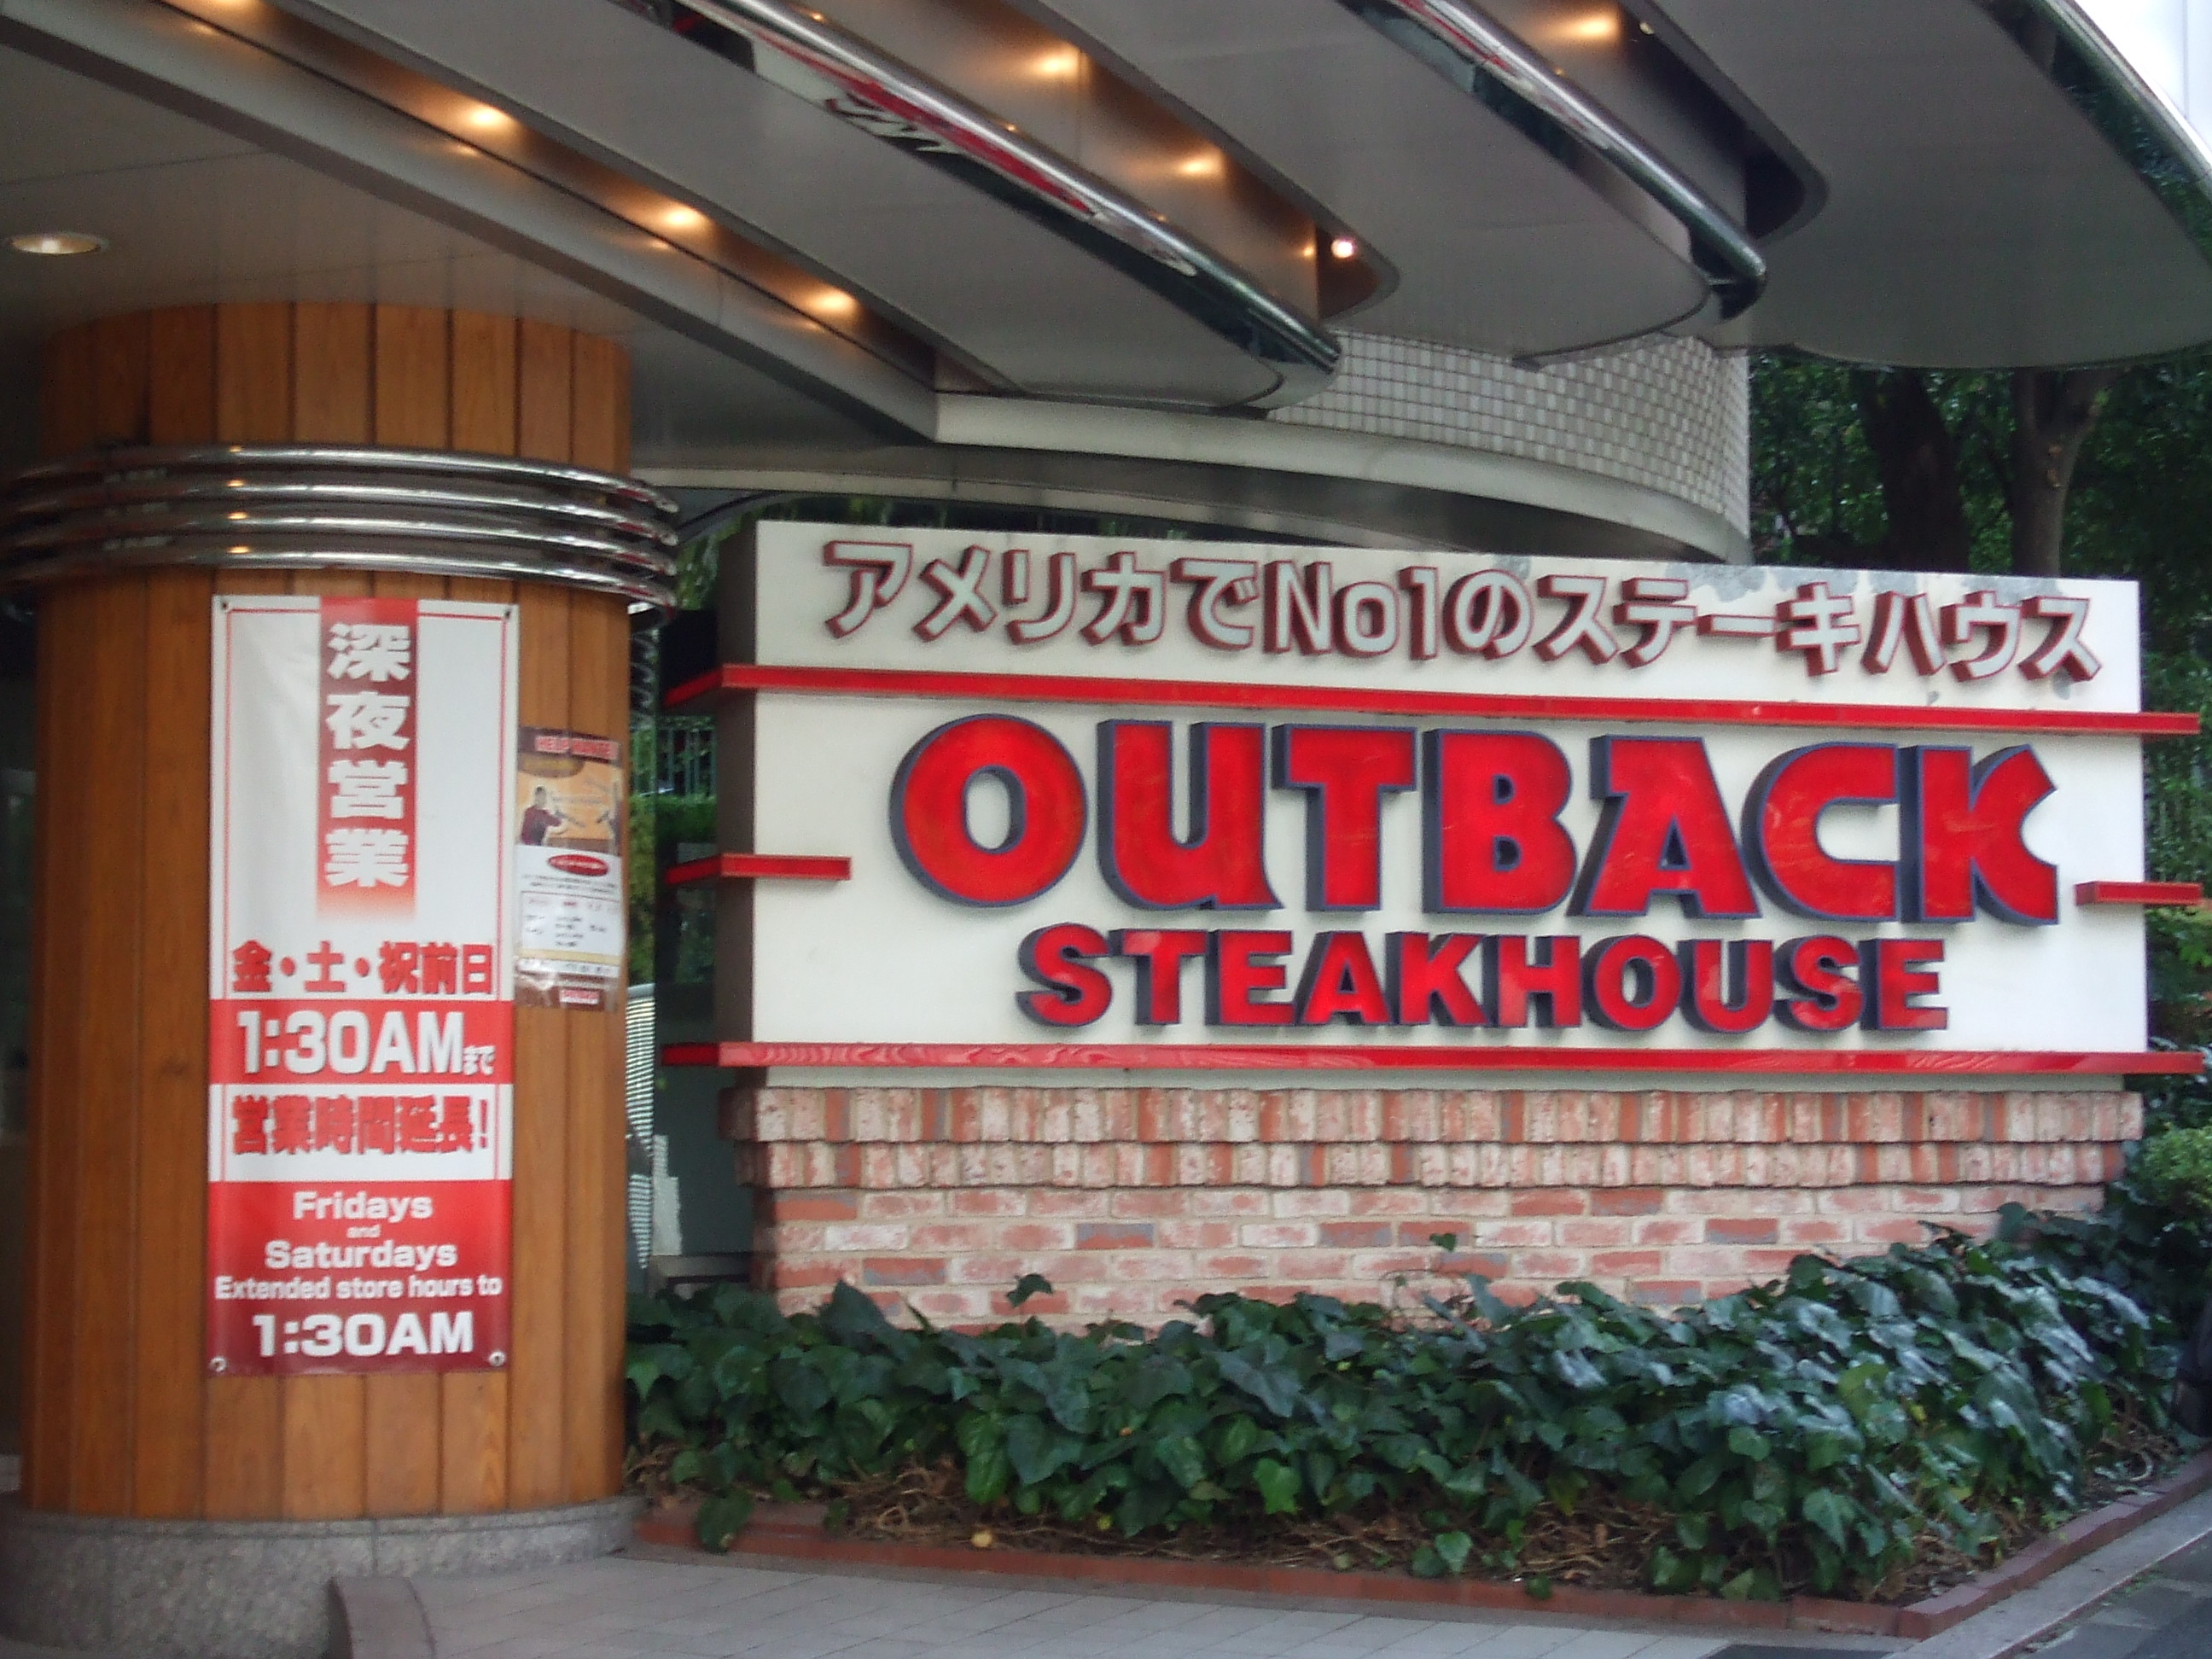 American Restaurants in Japan